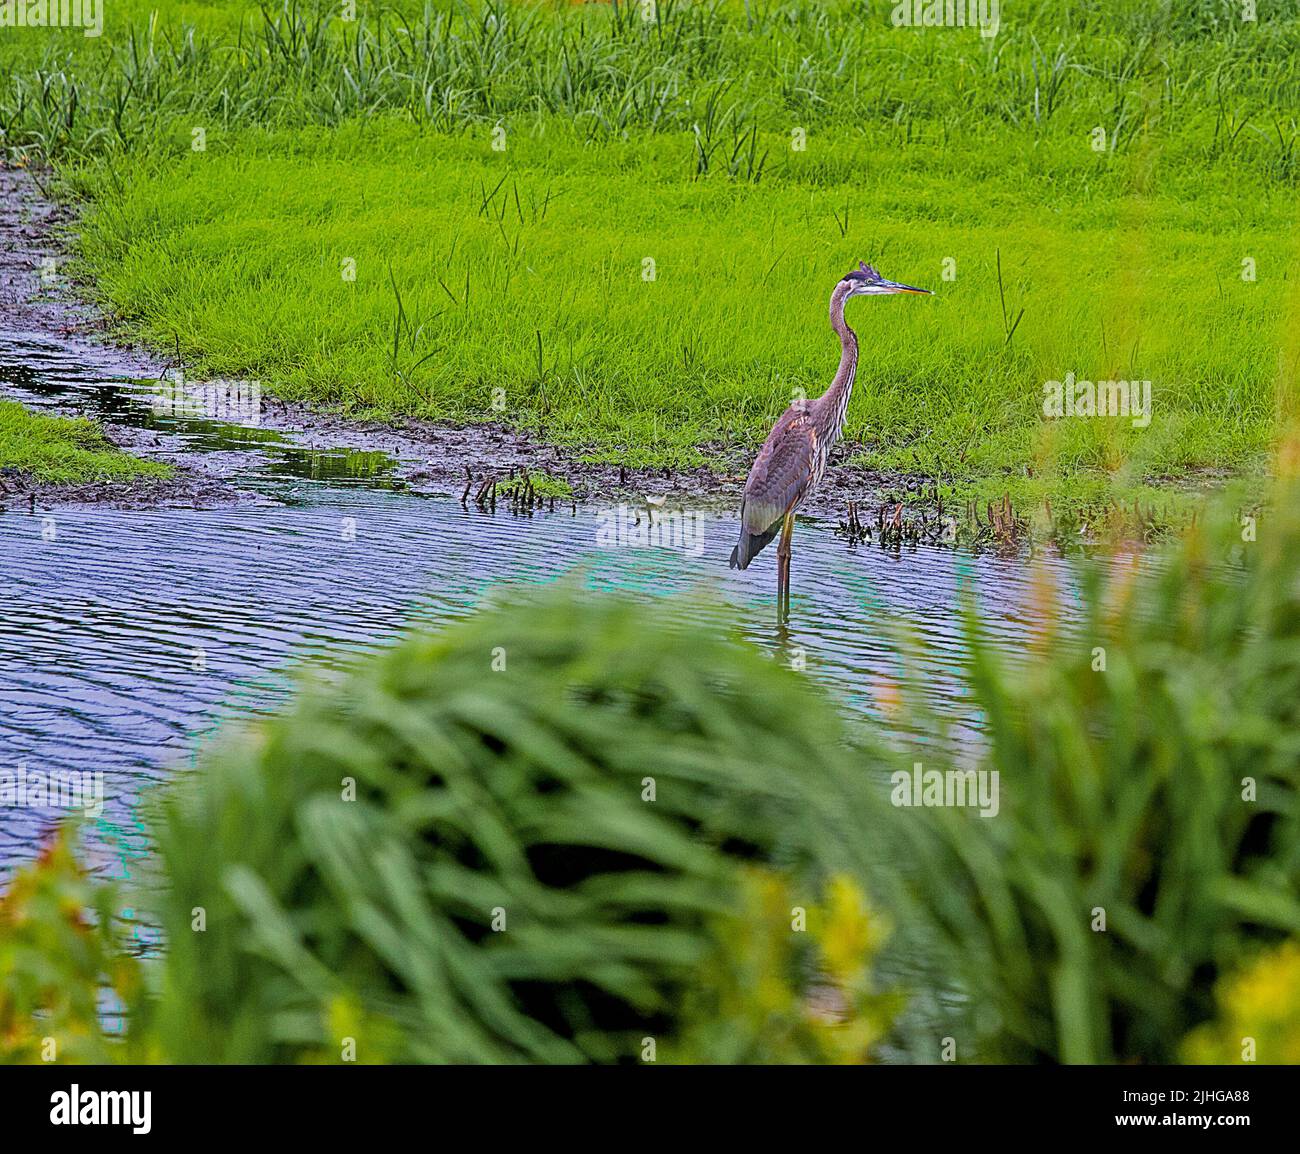 Tall wildlife birds wading in Wetland waters Stock Photo